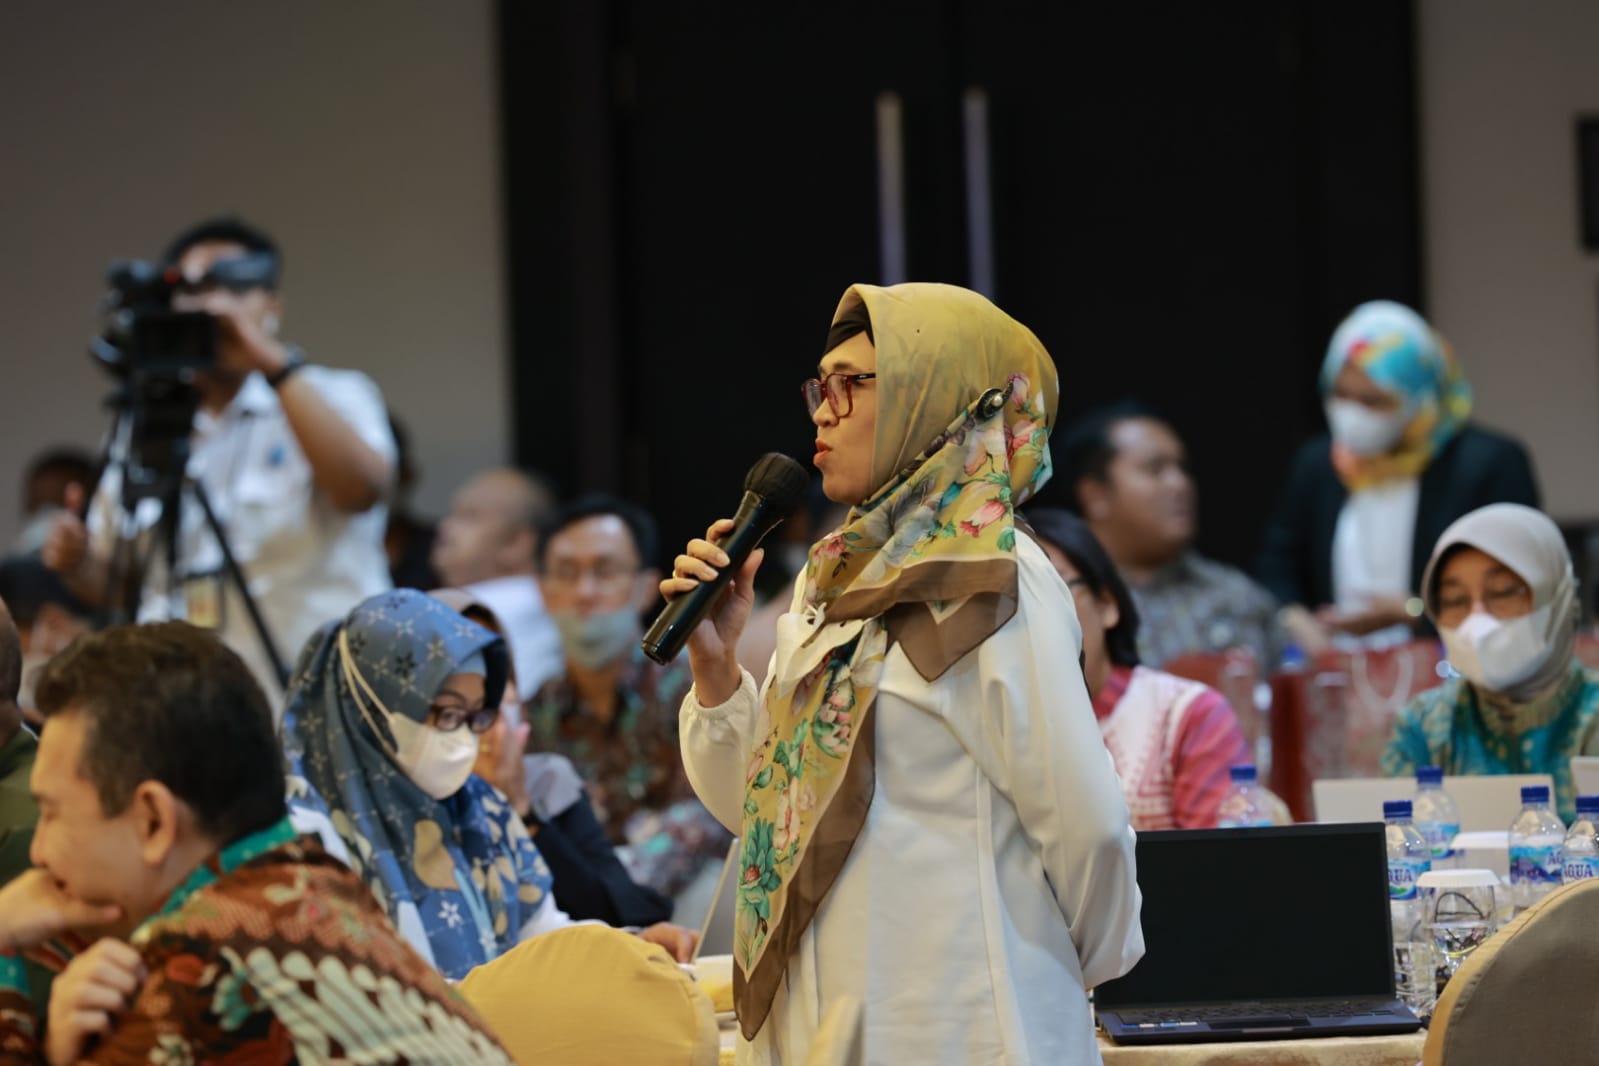 Menuju Ibu Kota Nusantara, ANRI Selenggarakan Rapat Koordinasi Penataan Arsip Kementerian/Lembaga